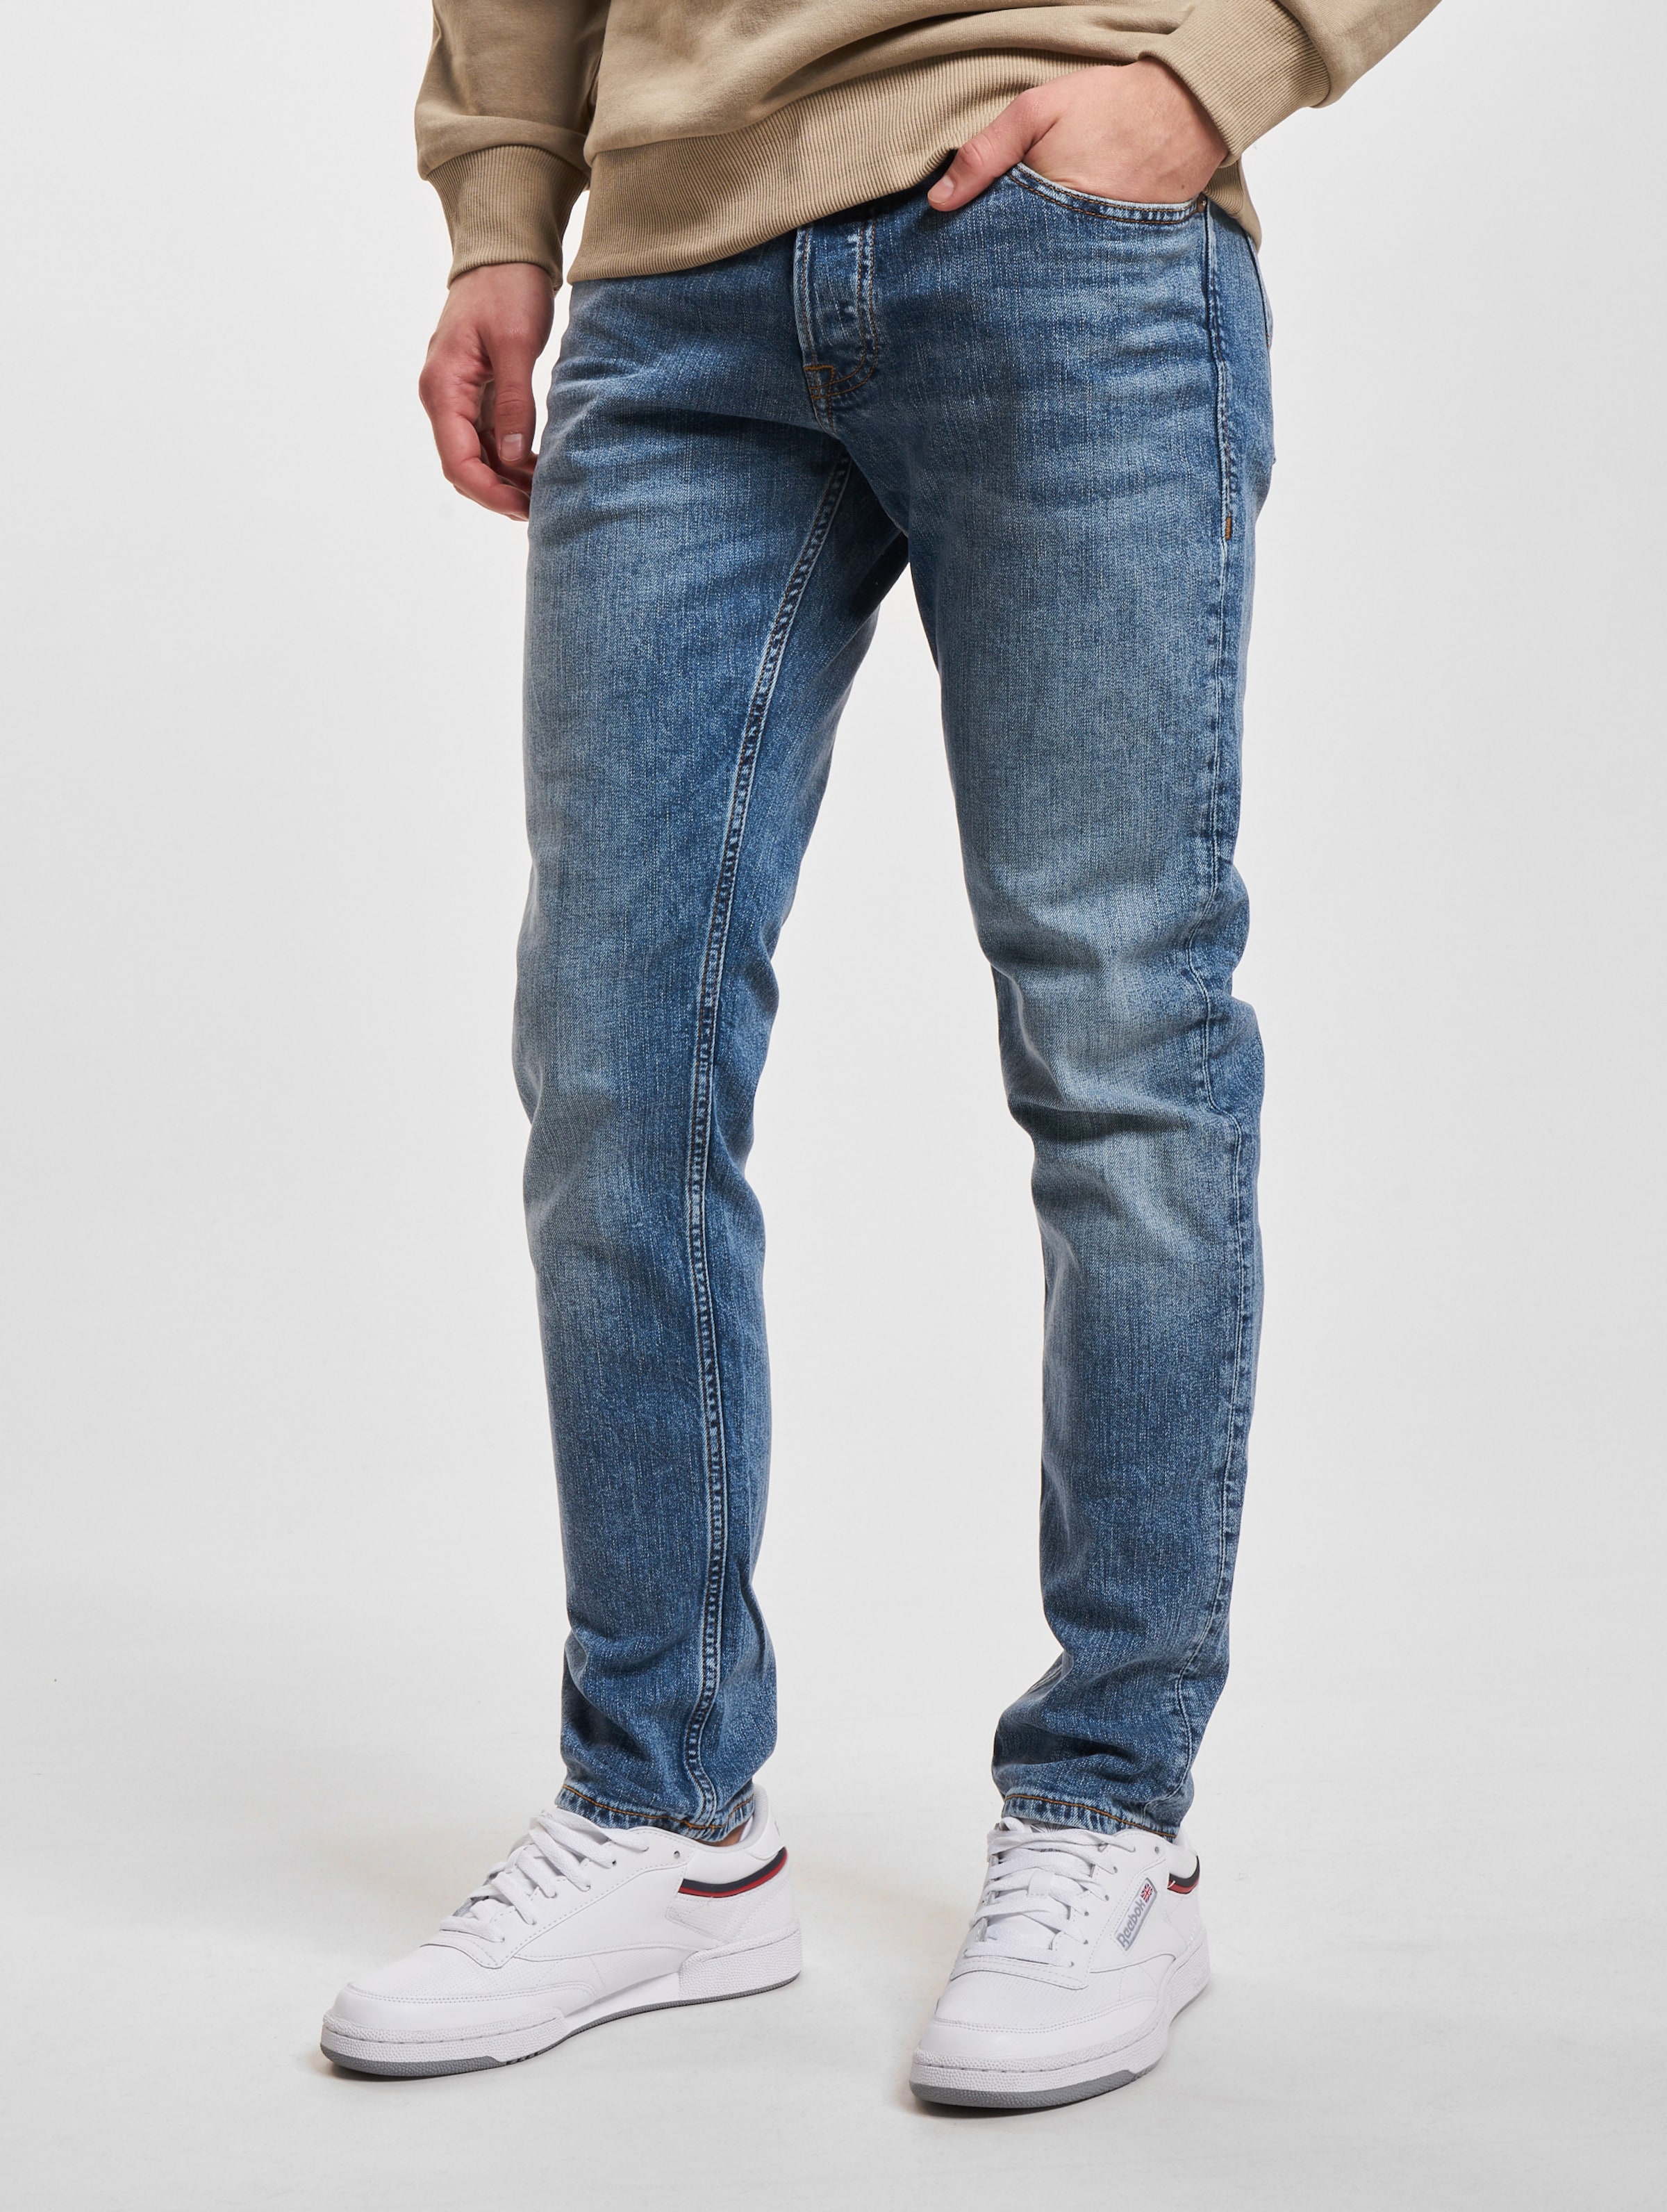 Jack & Jones Glenn Original Skinny Fit Jeans Mannen op kleur blauw, Maat 3234